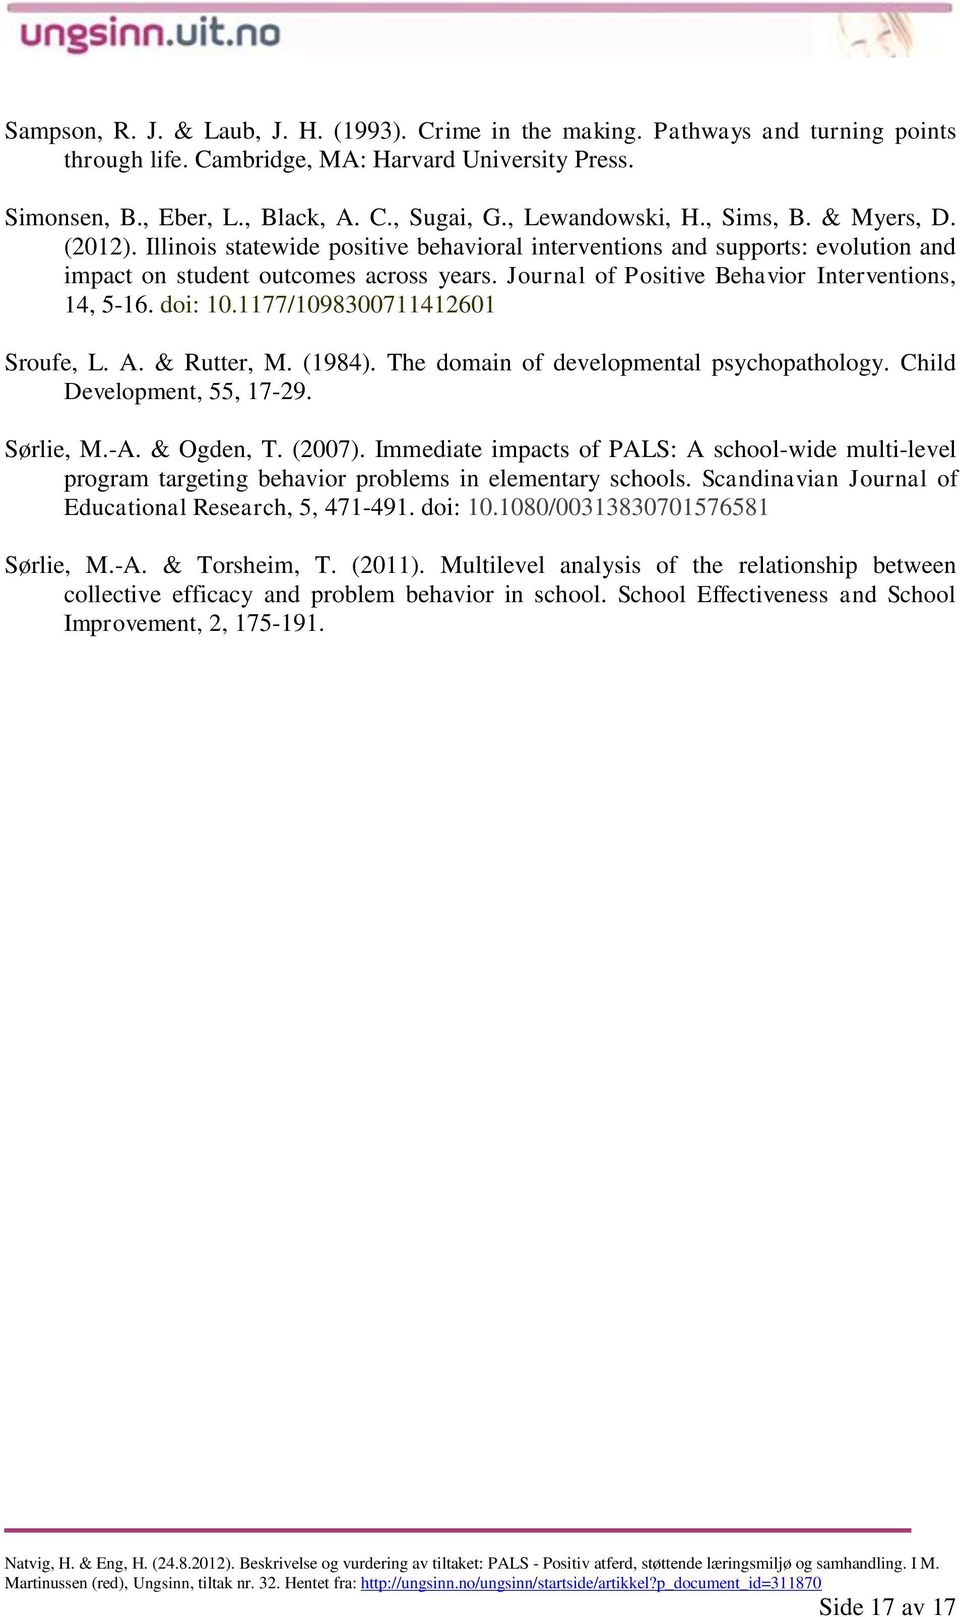 Journal of Positive Behavior Interventions, 14, 5-16. doi: 10.1177/1098300711412601 Sroufe, L. A. & Rutter, M. (1984). The domain of developmental psychopathology. Child Development, 55, 17-29.